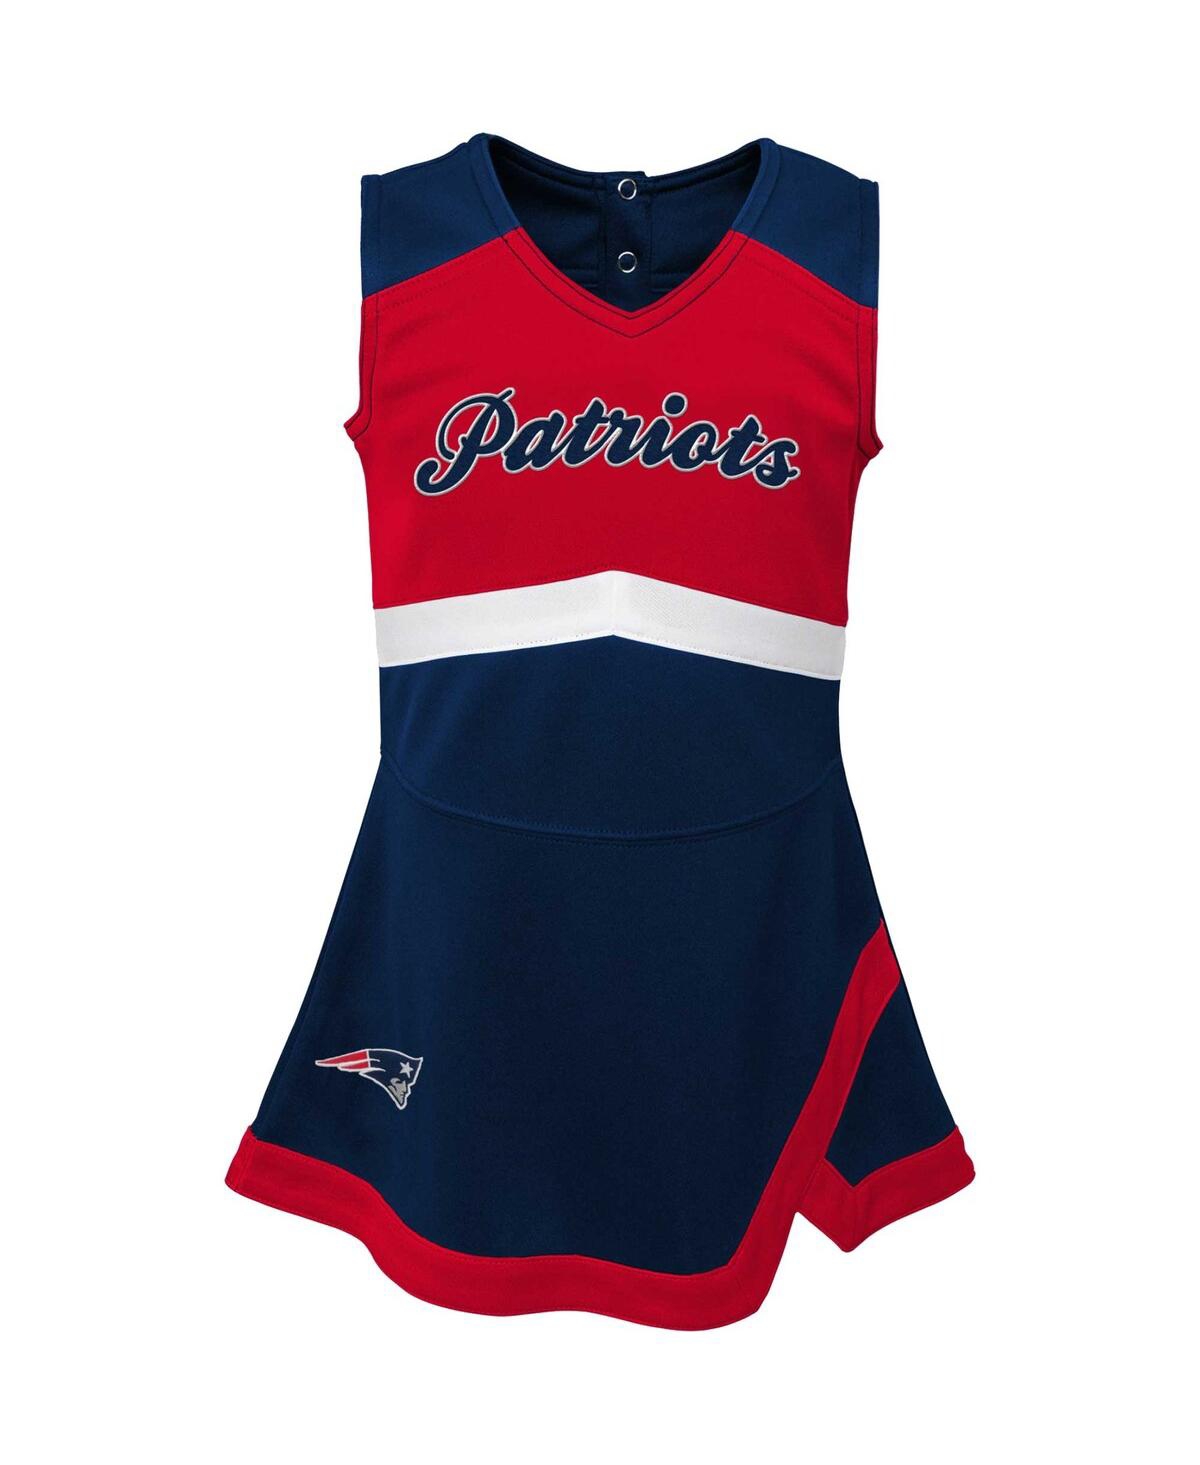 Shop Outerstuff Baby Girls Navy New England Patriots Cheer Captain Jumper Dress